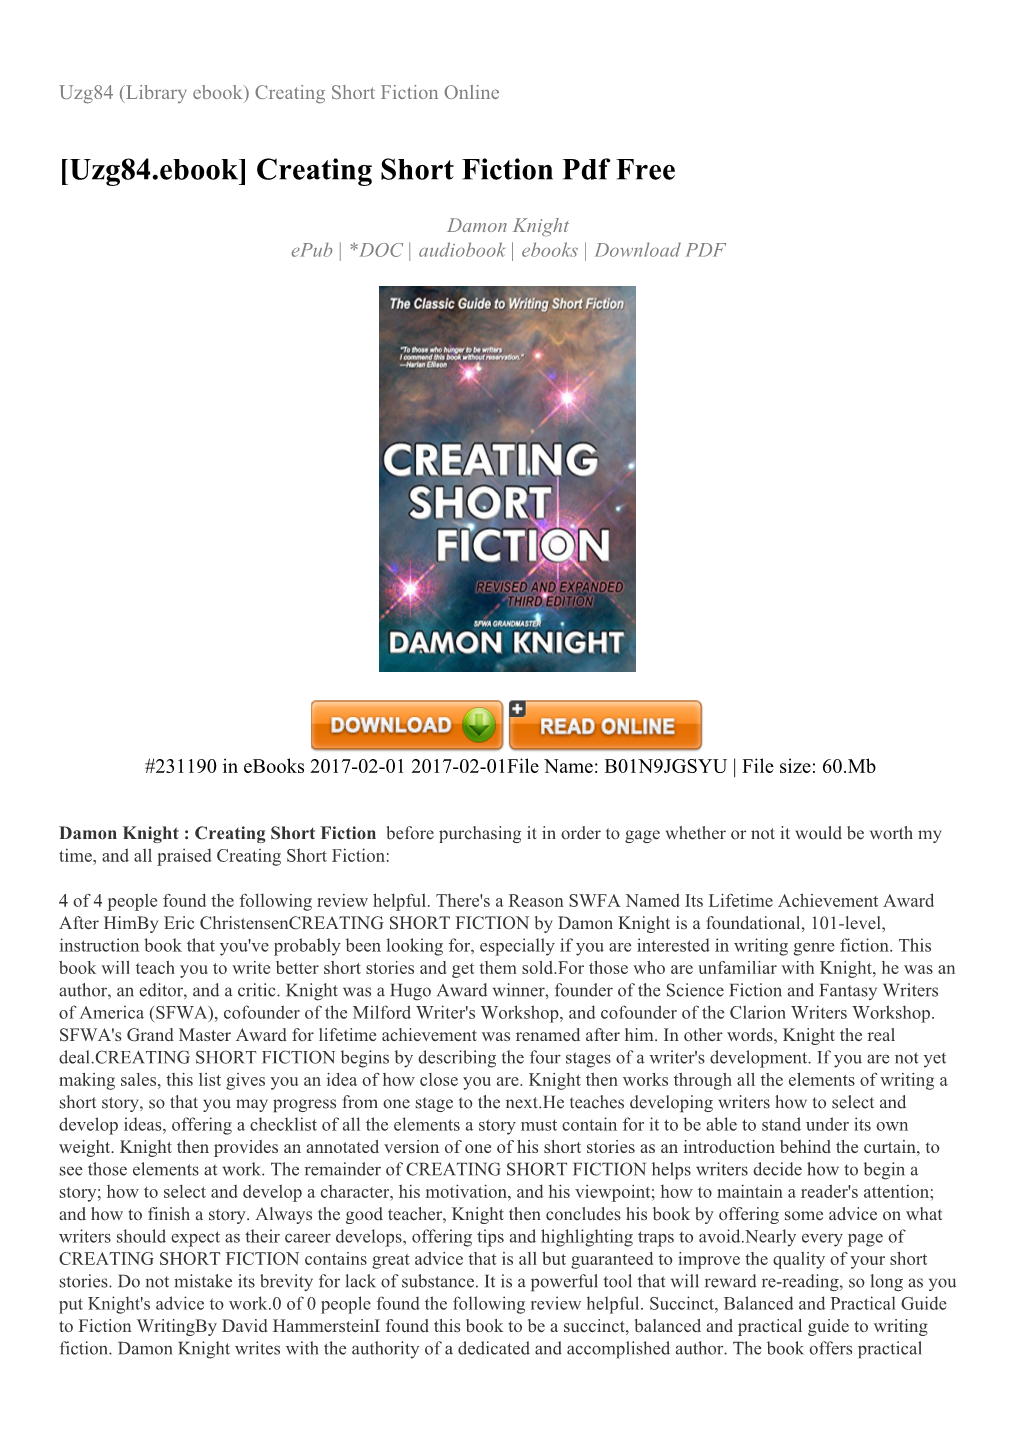 Creating Short Fiction Online